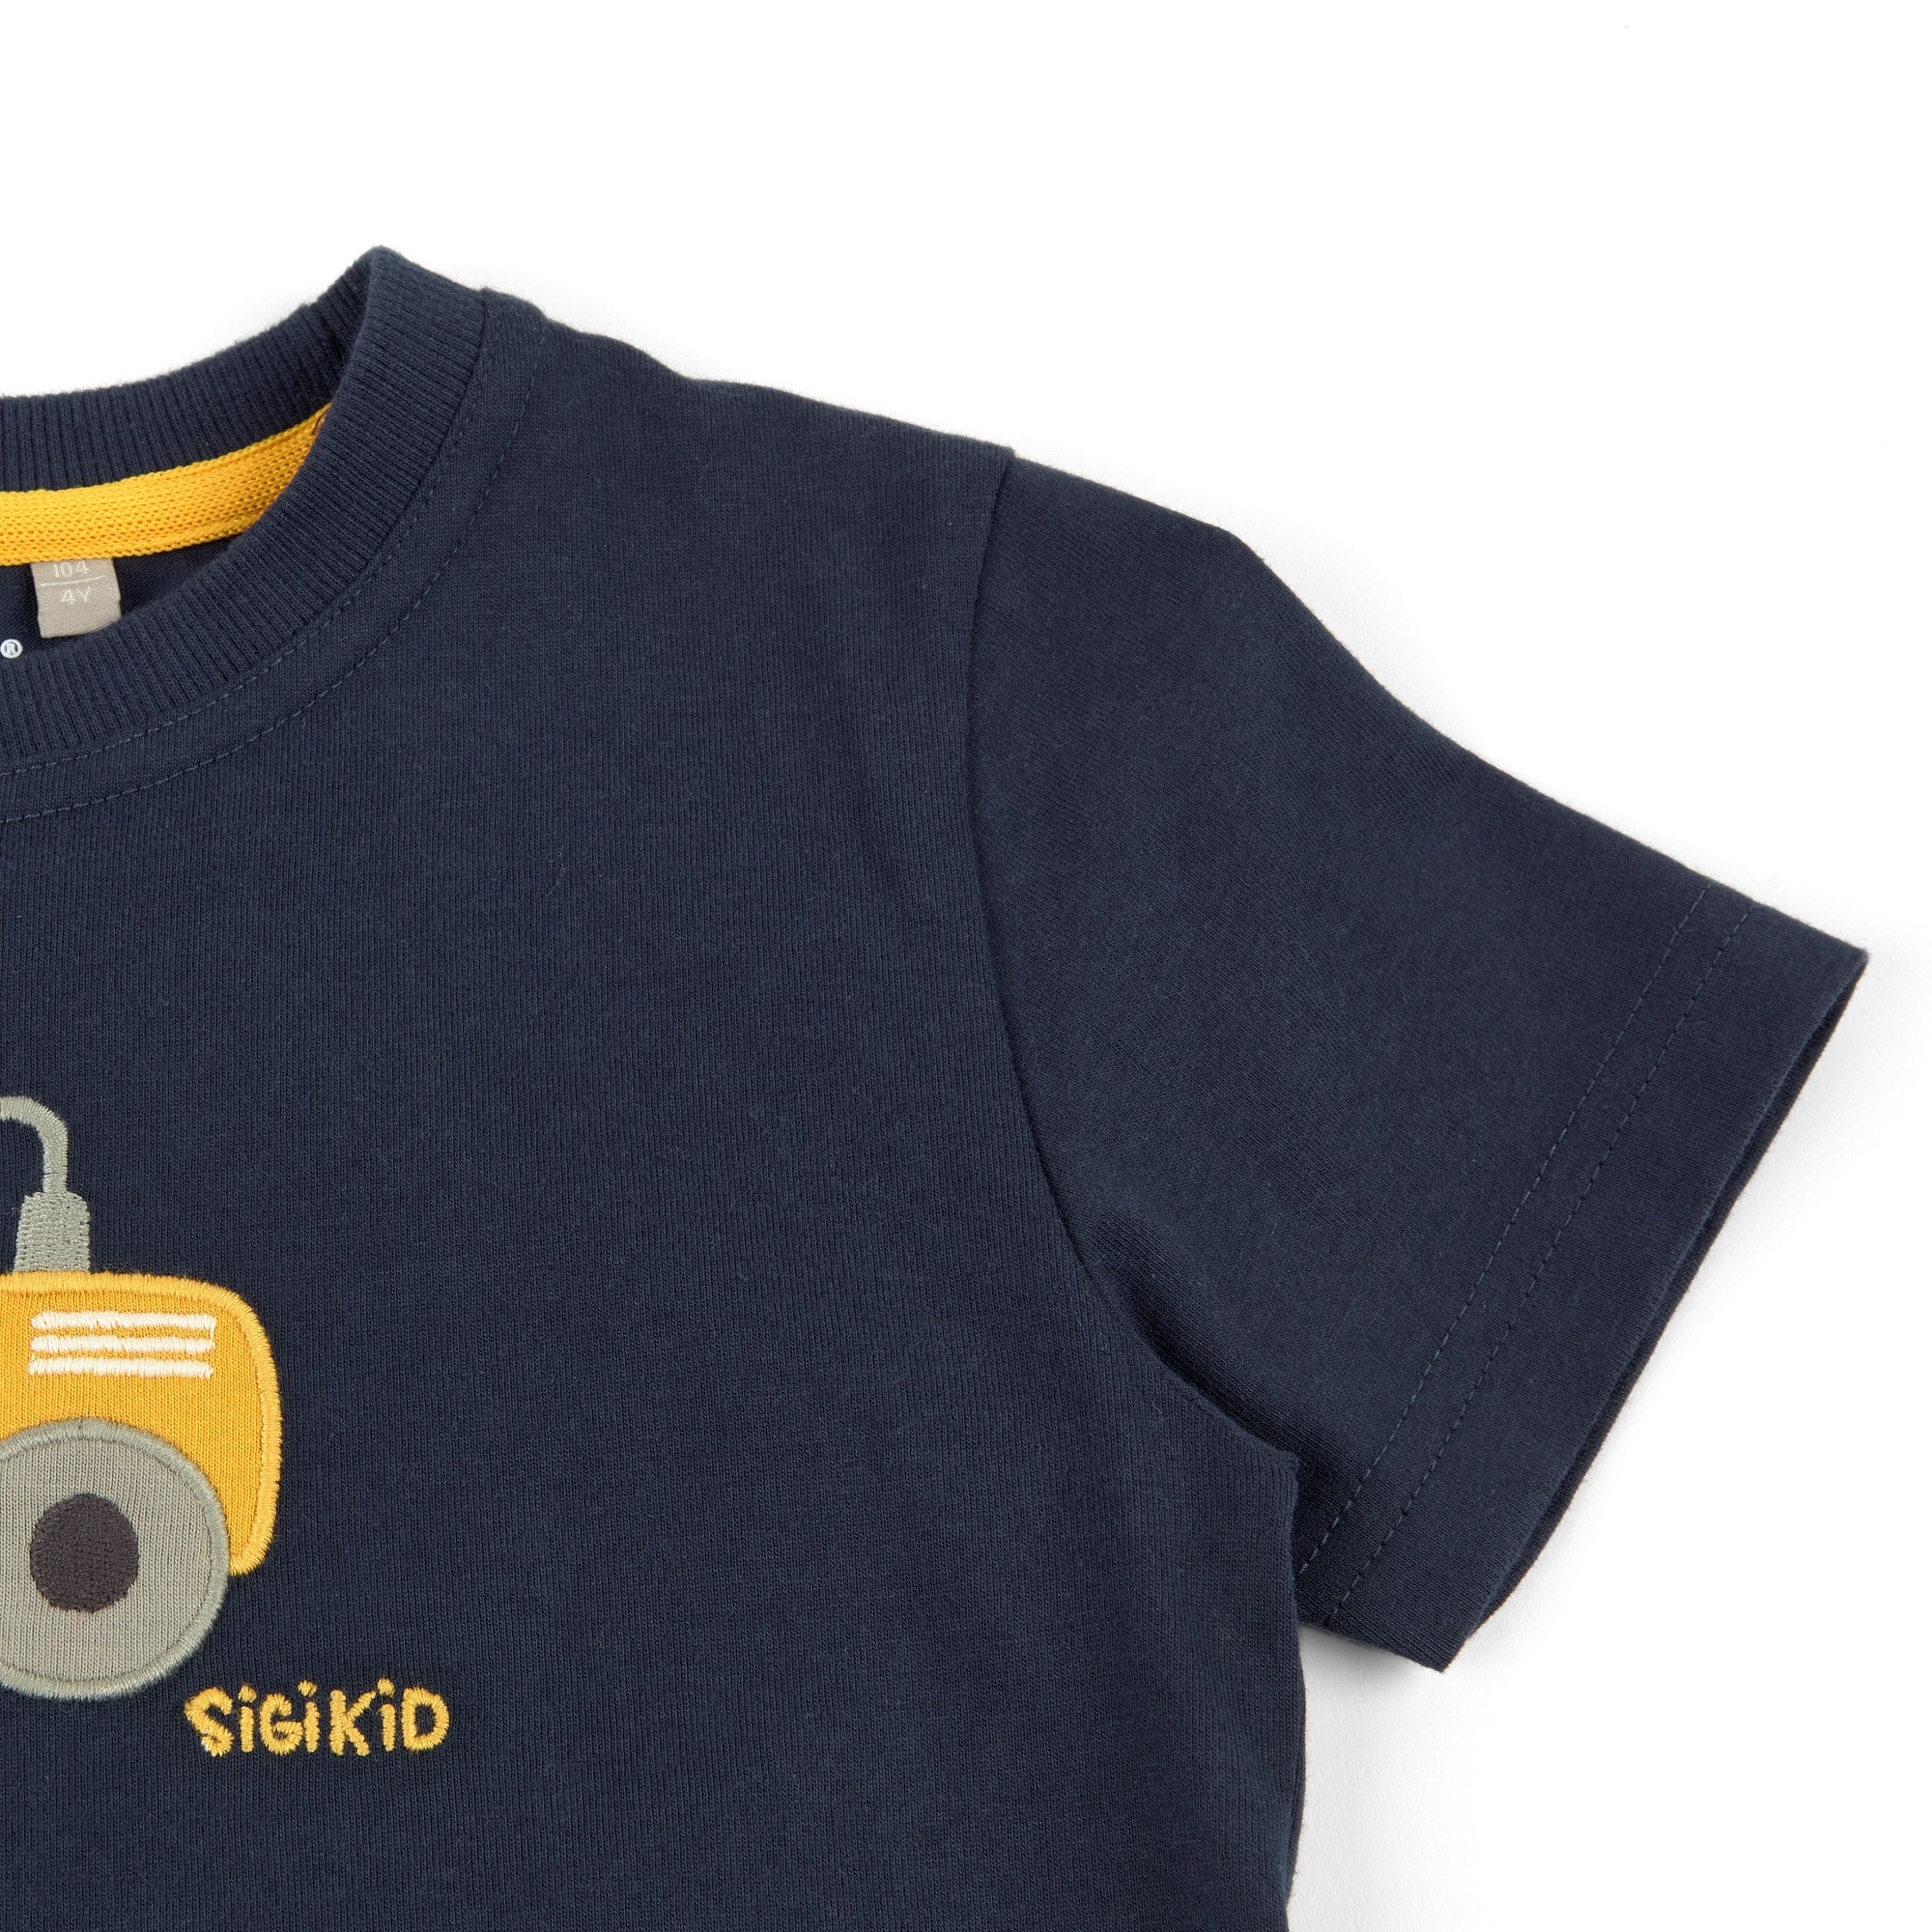 Children's navy T-shirt vintage tractor